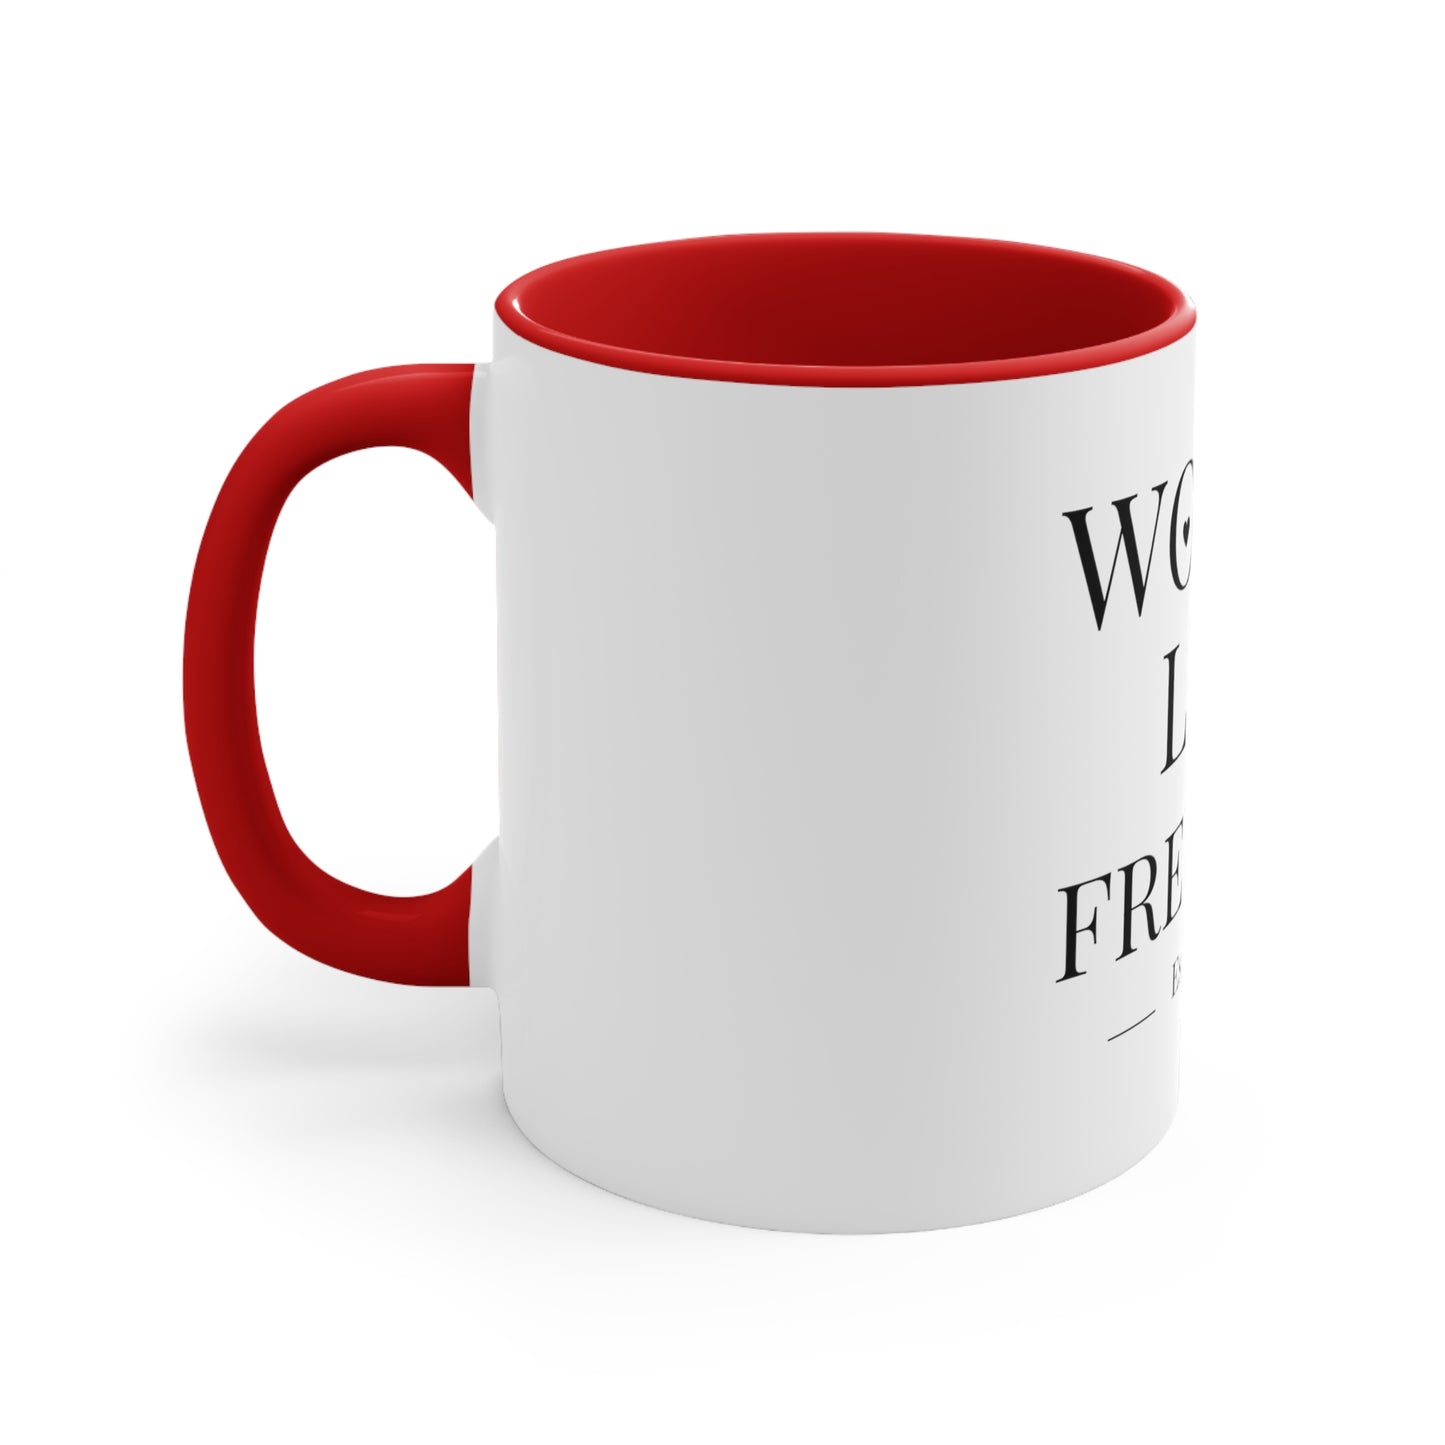 Women Life Freedom Red - Accent Coffee Mug, 11oz